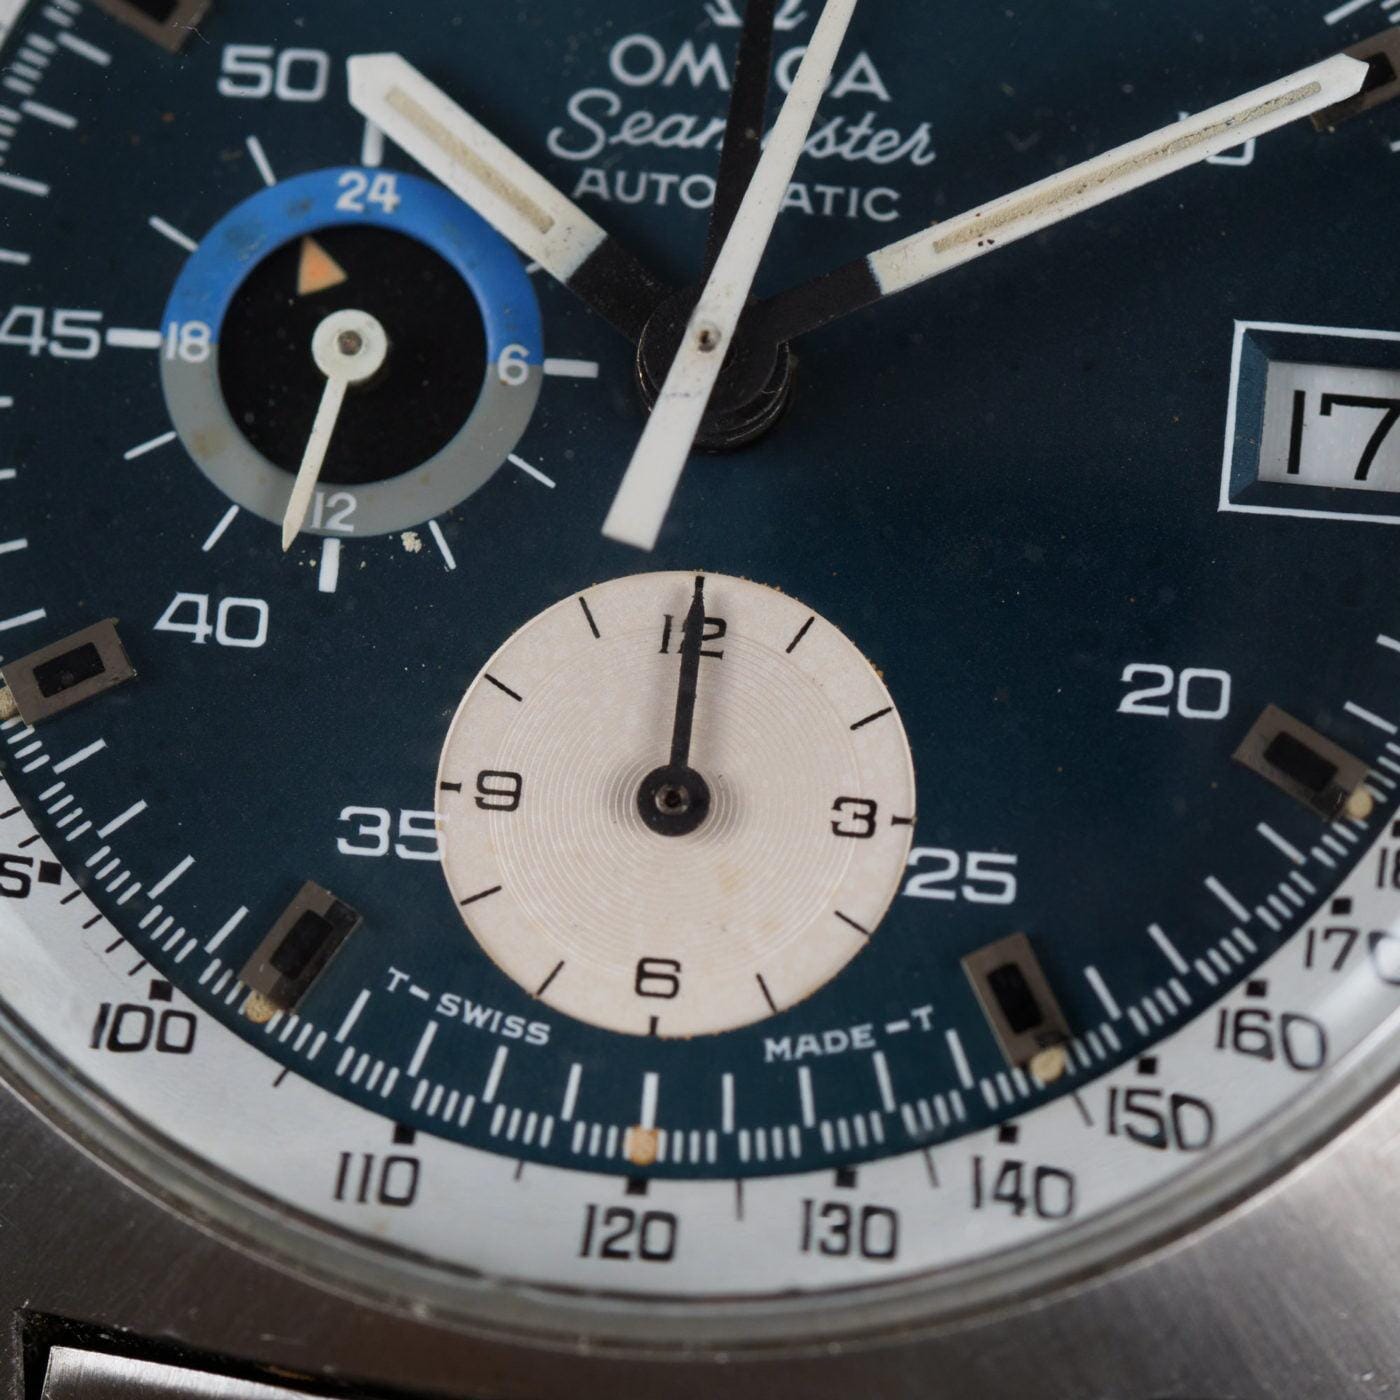 OMEGA Seamaster Chronograph 176.007 - Arbitro